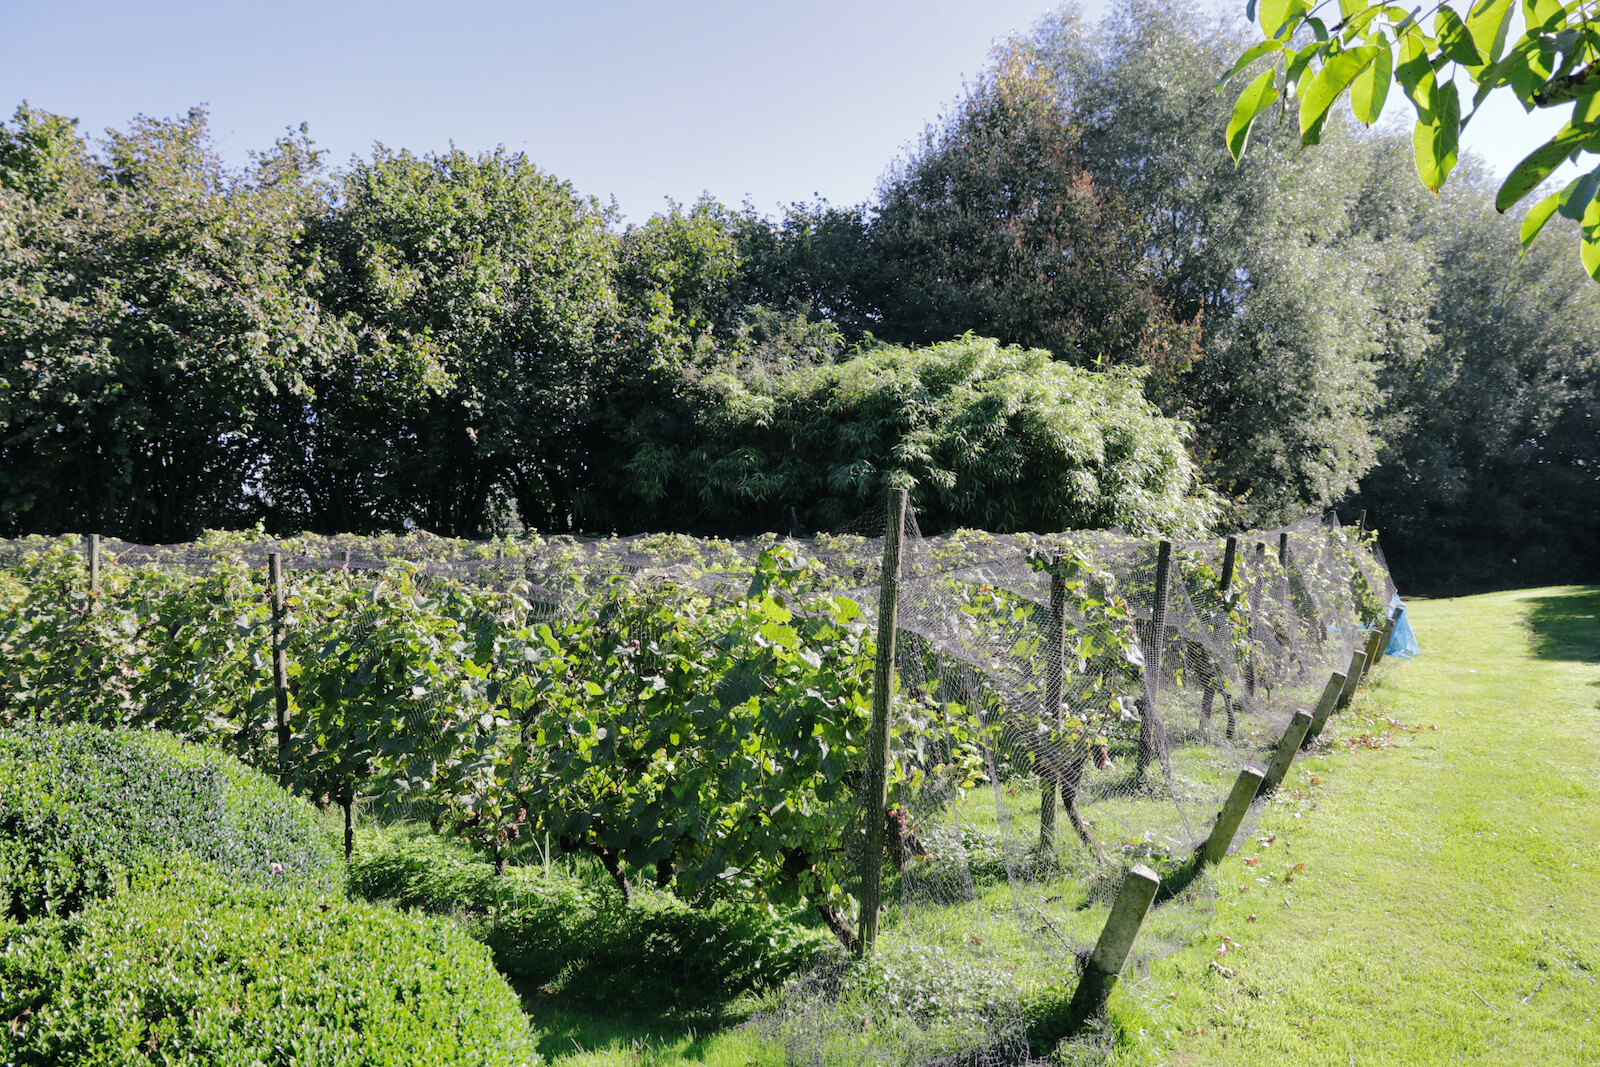 One of the smaller vineyards of Dutch winery Domaine d'Heerstaayen